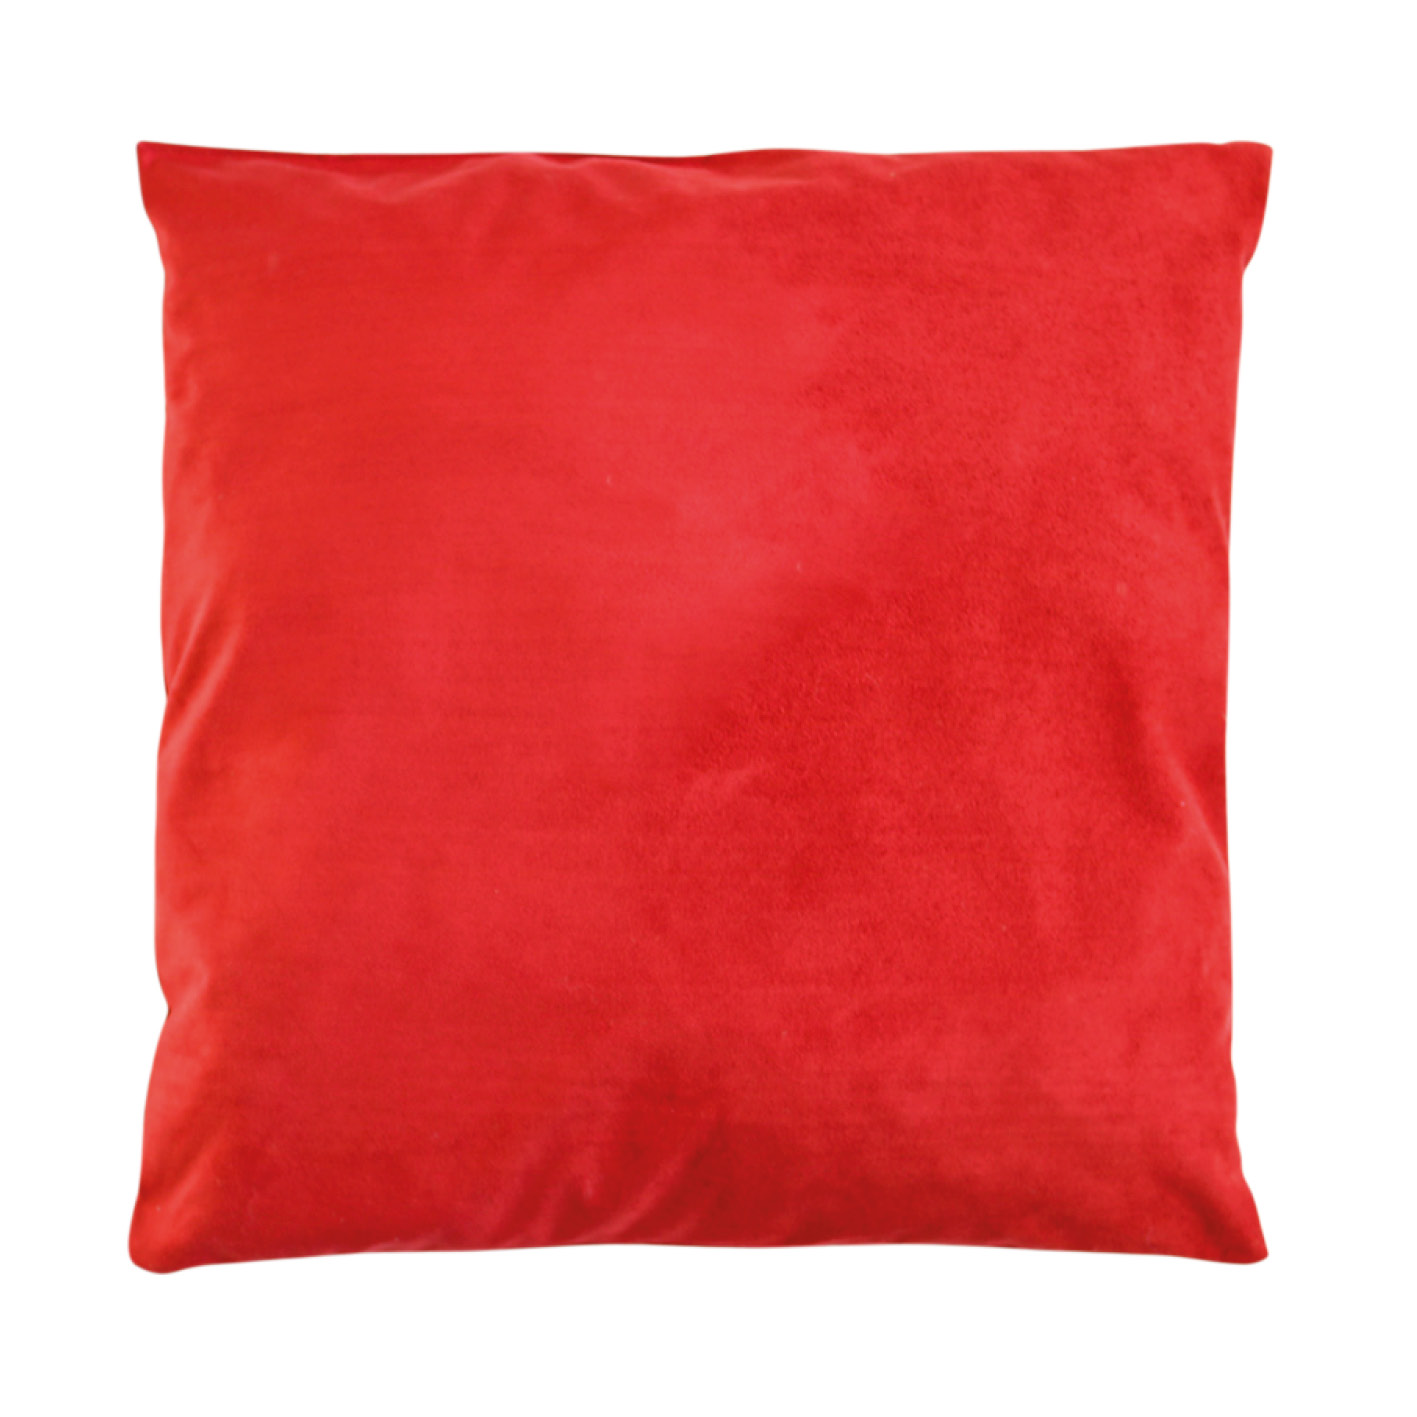 almofada decorativa vermelha 45x45cm